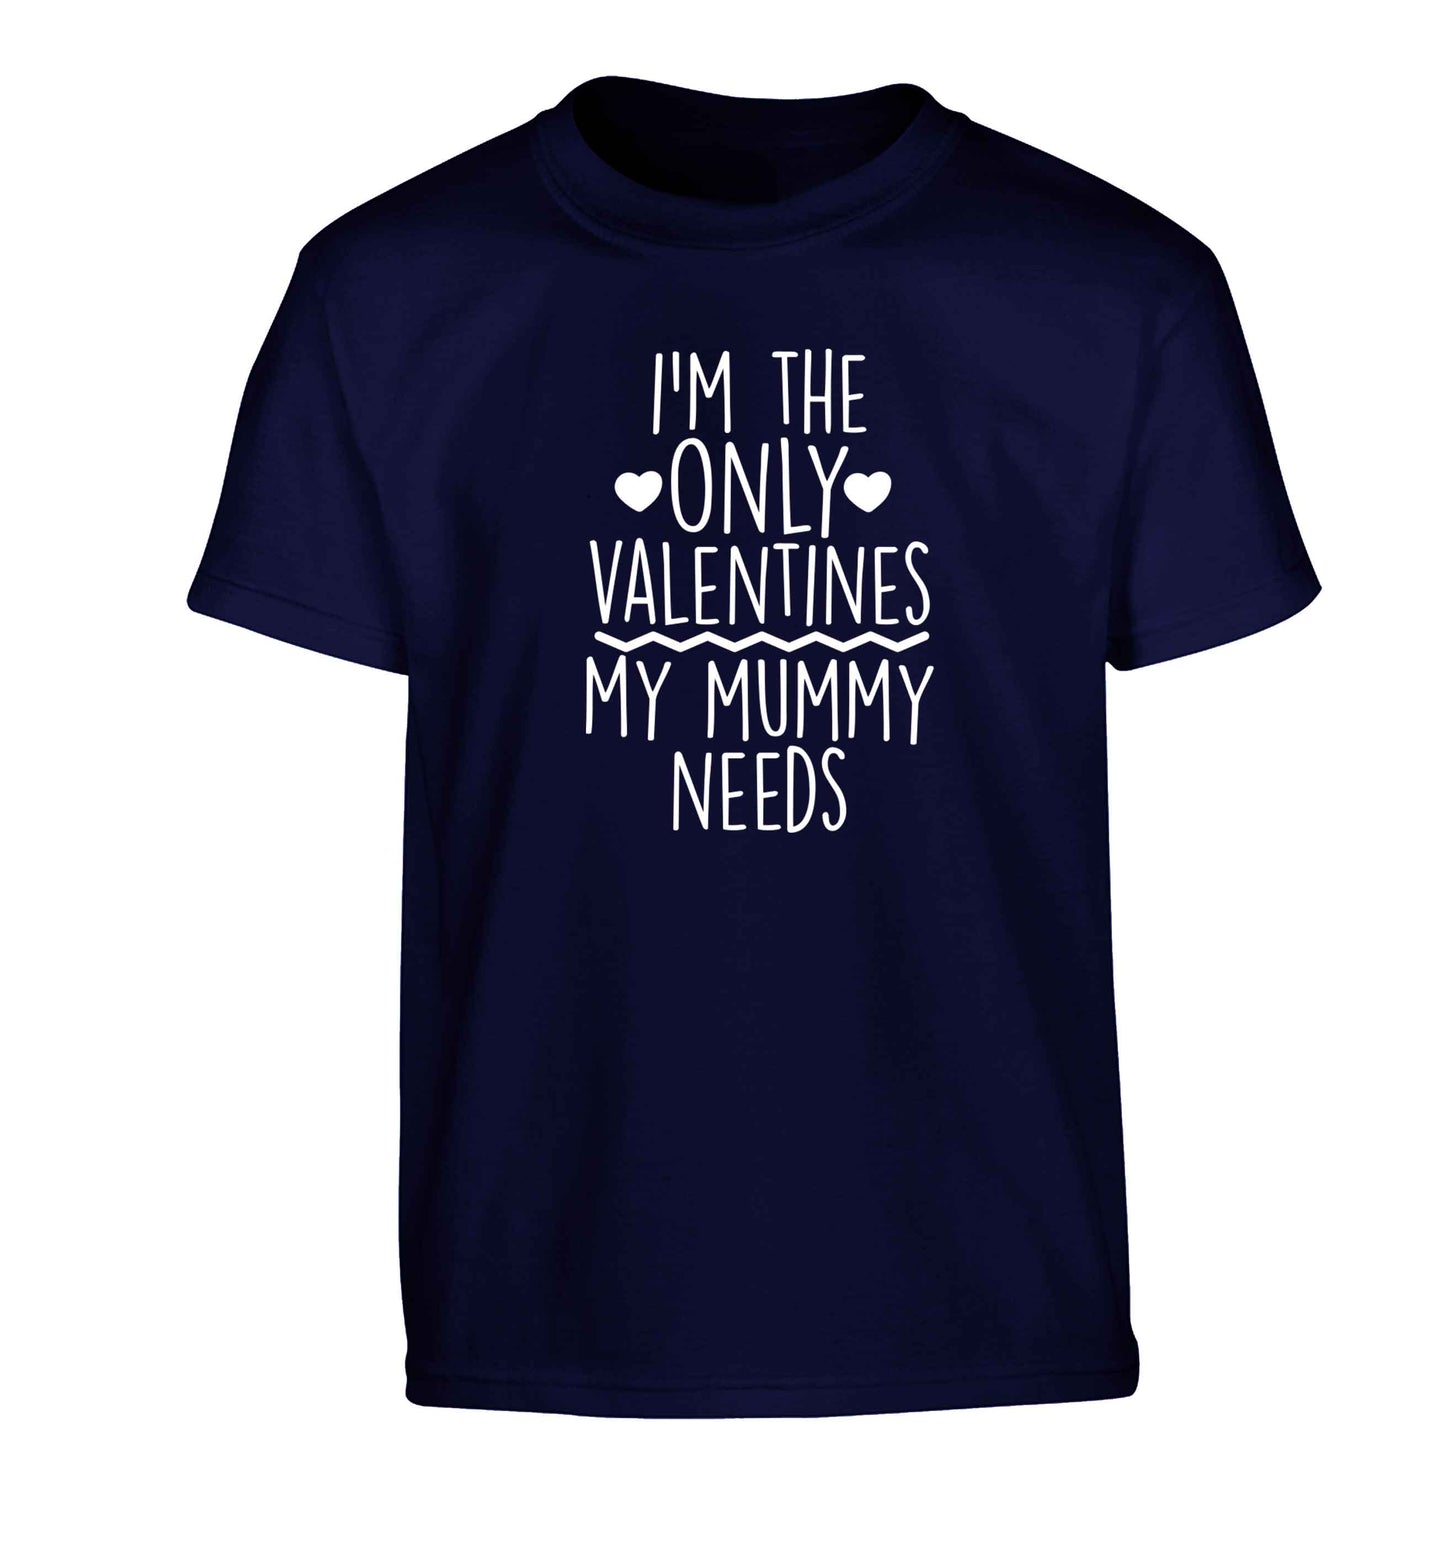 I'm the only valentines my mummy needs Children's navy Tshirt 12-13 Years